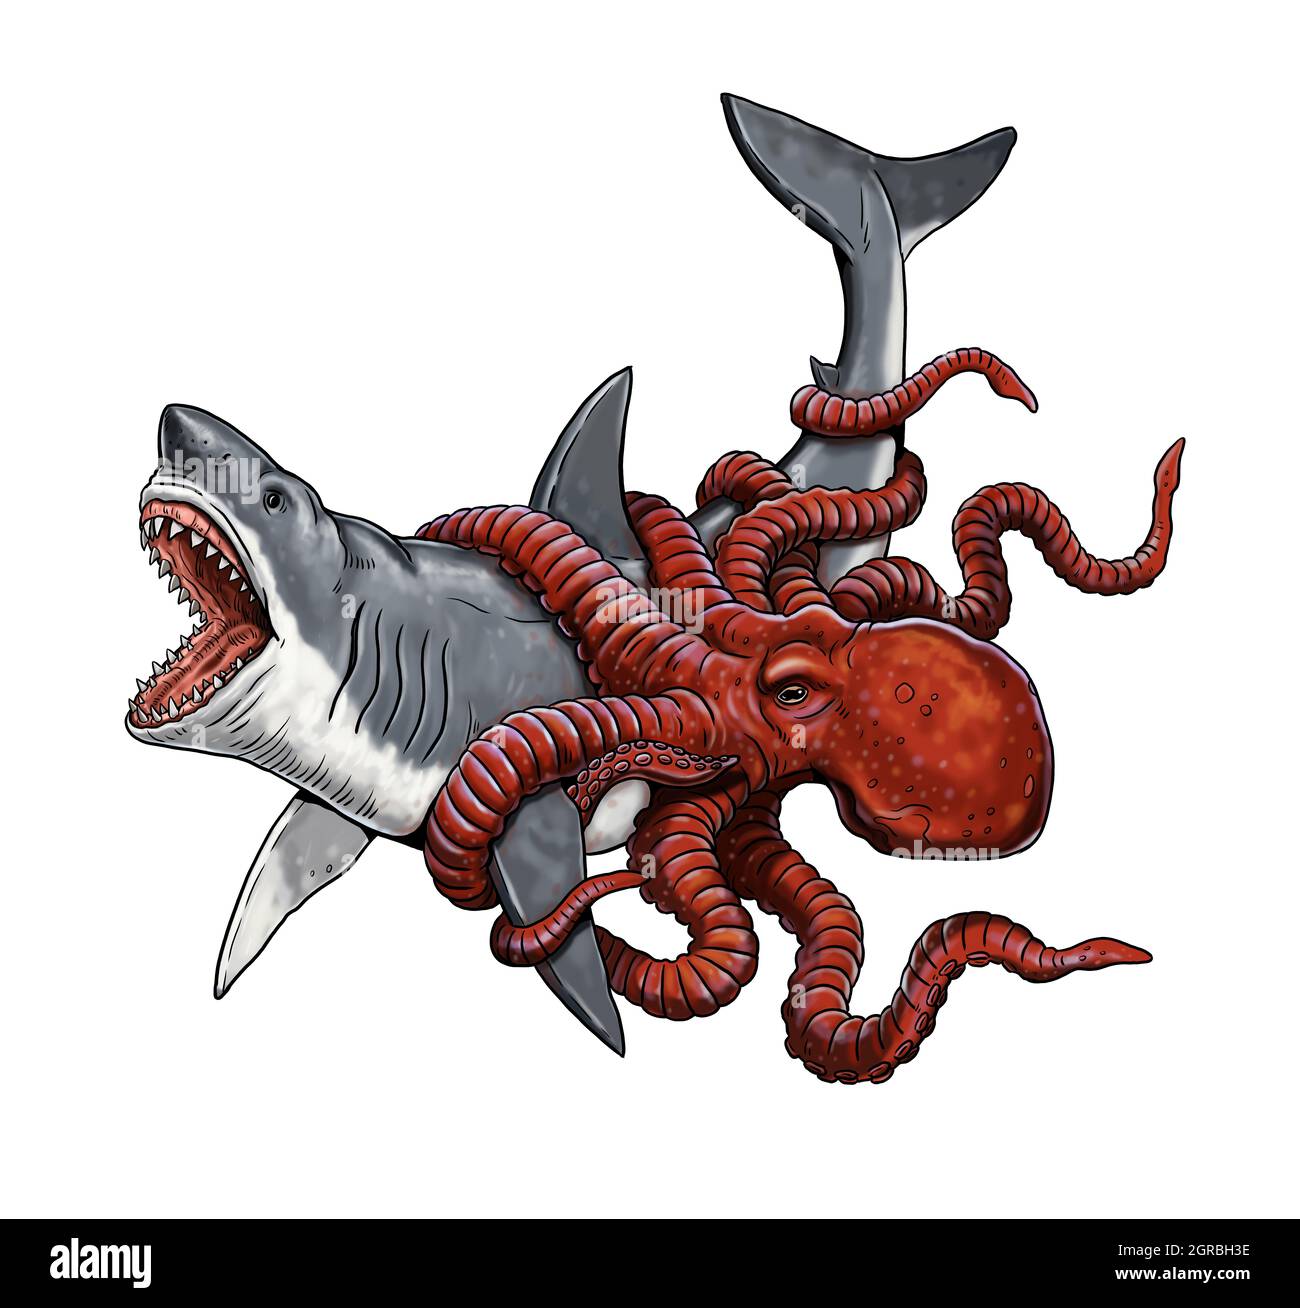 Giant octopus attacks a shark. Battle of the animals illustration. Stock Photo